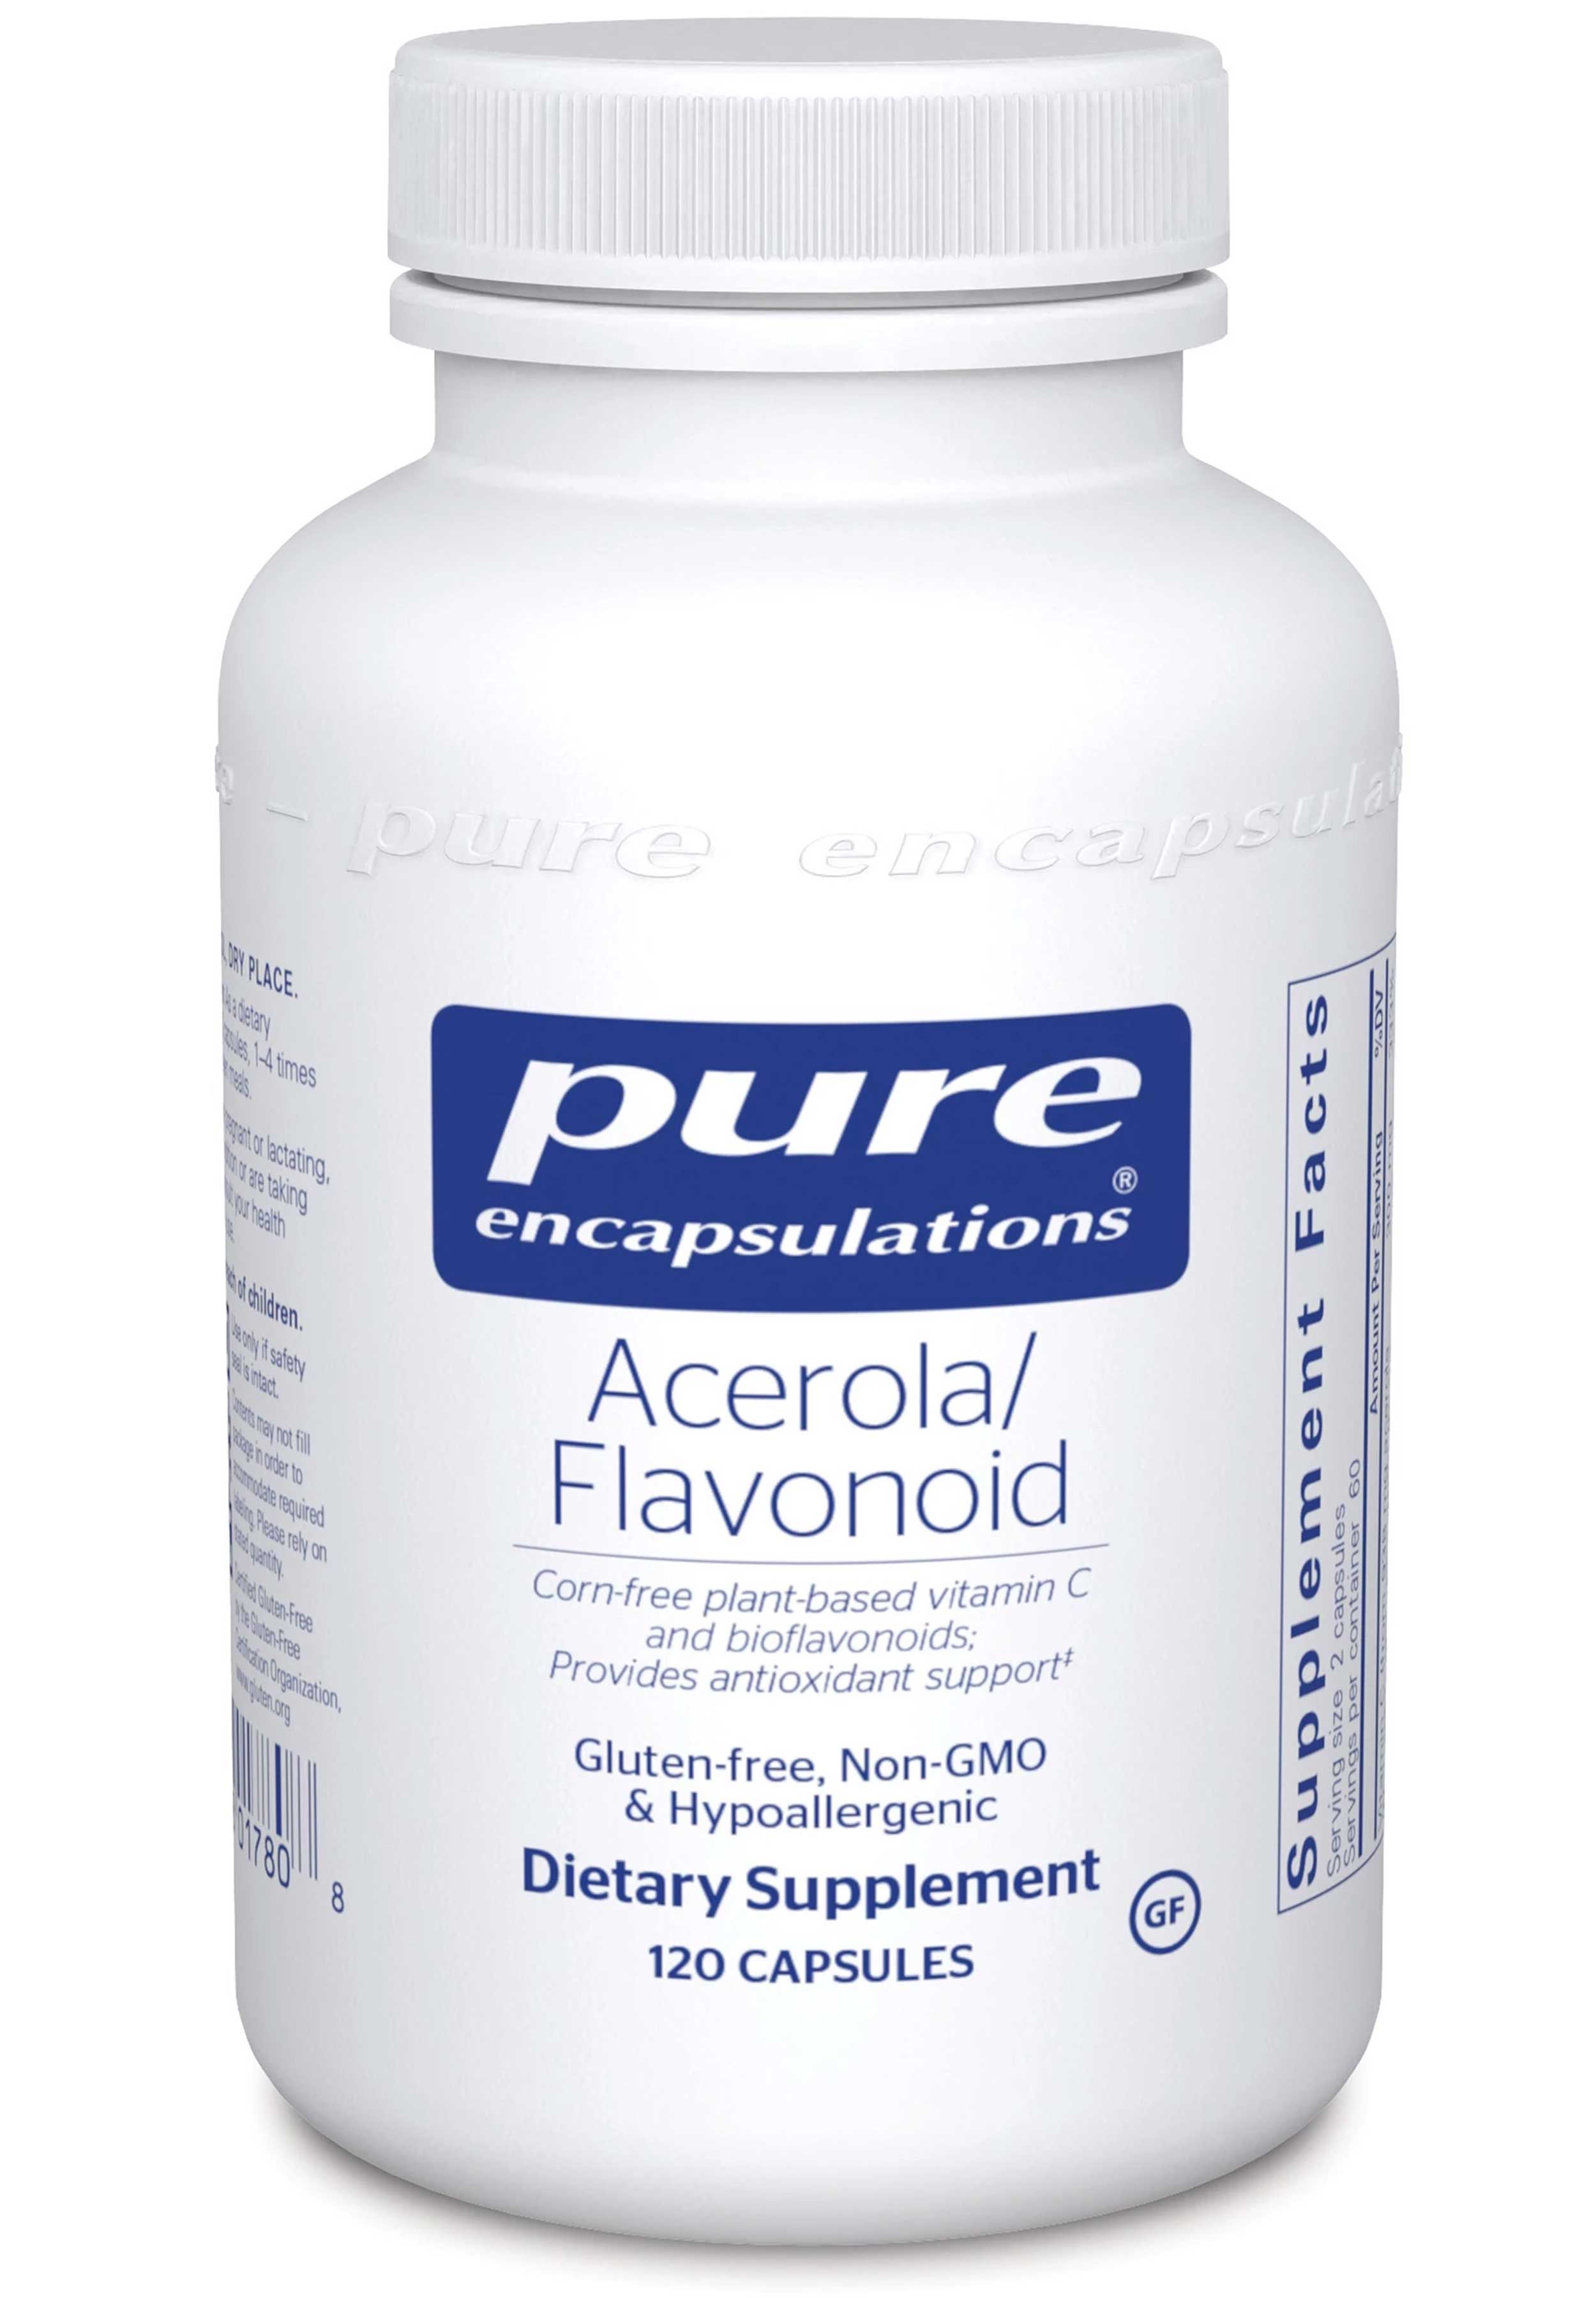 Pure Encapsulations Acerola/Flavonoid